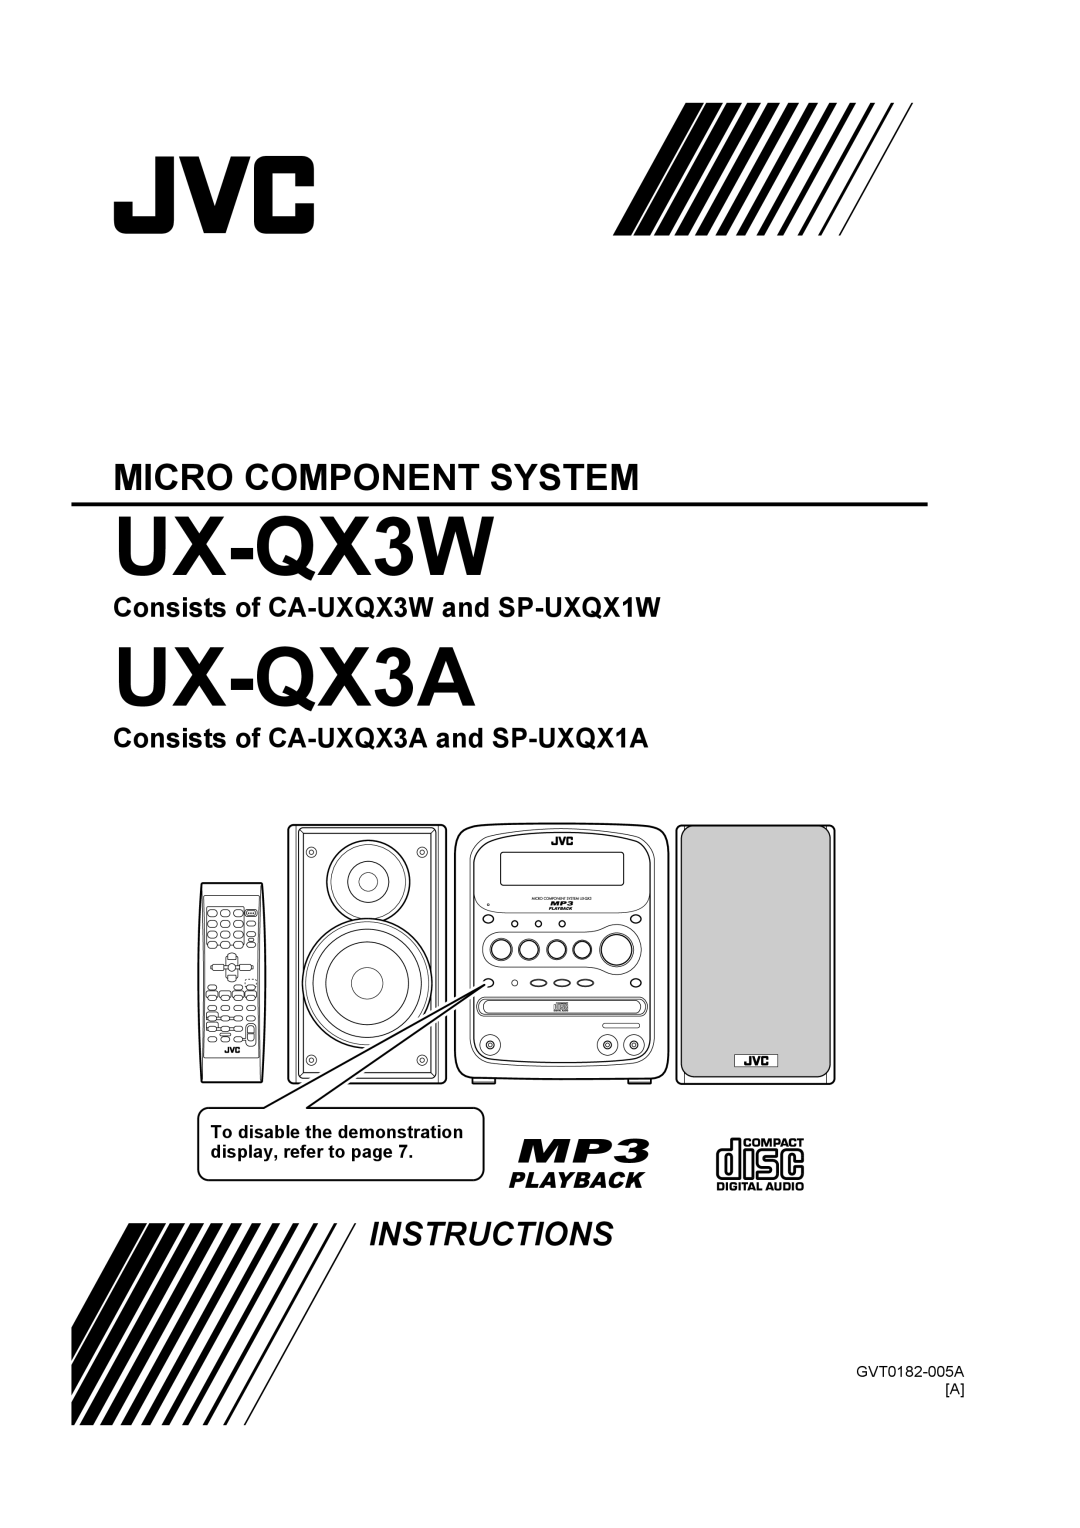 JVC UX-QX3A manual Consists of CA-UXQX3Wand SP-UXQX1W, Consists of CA-UXQX3Aand SP-UXQX1A, UX-QX3W, Micro Component System 